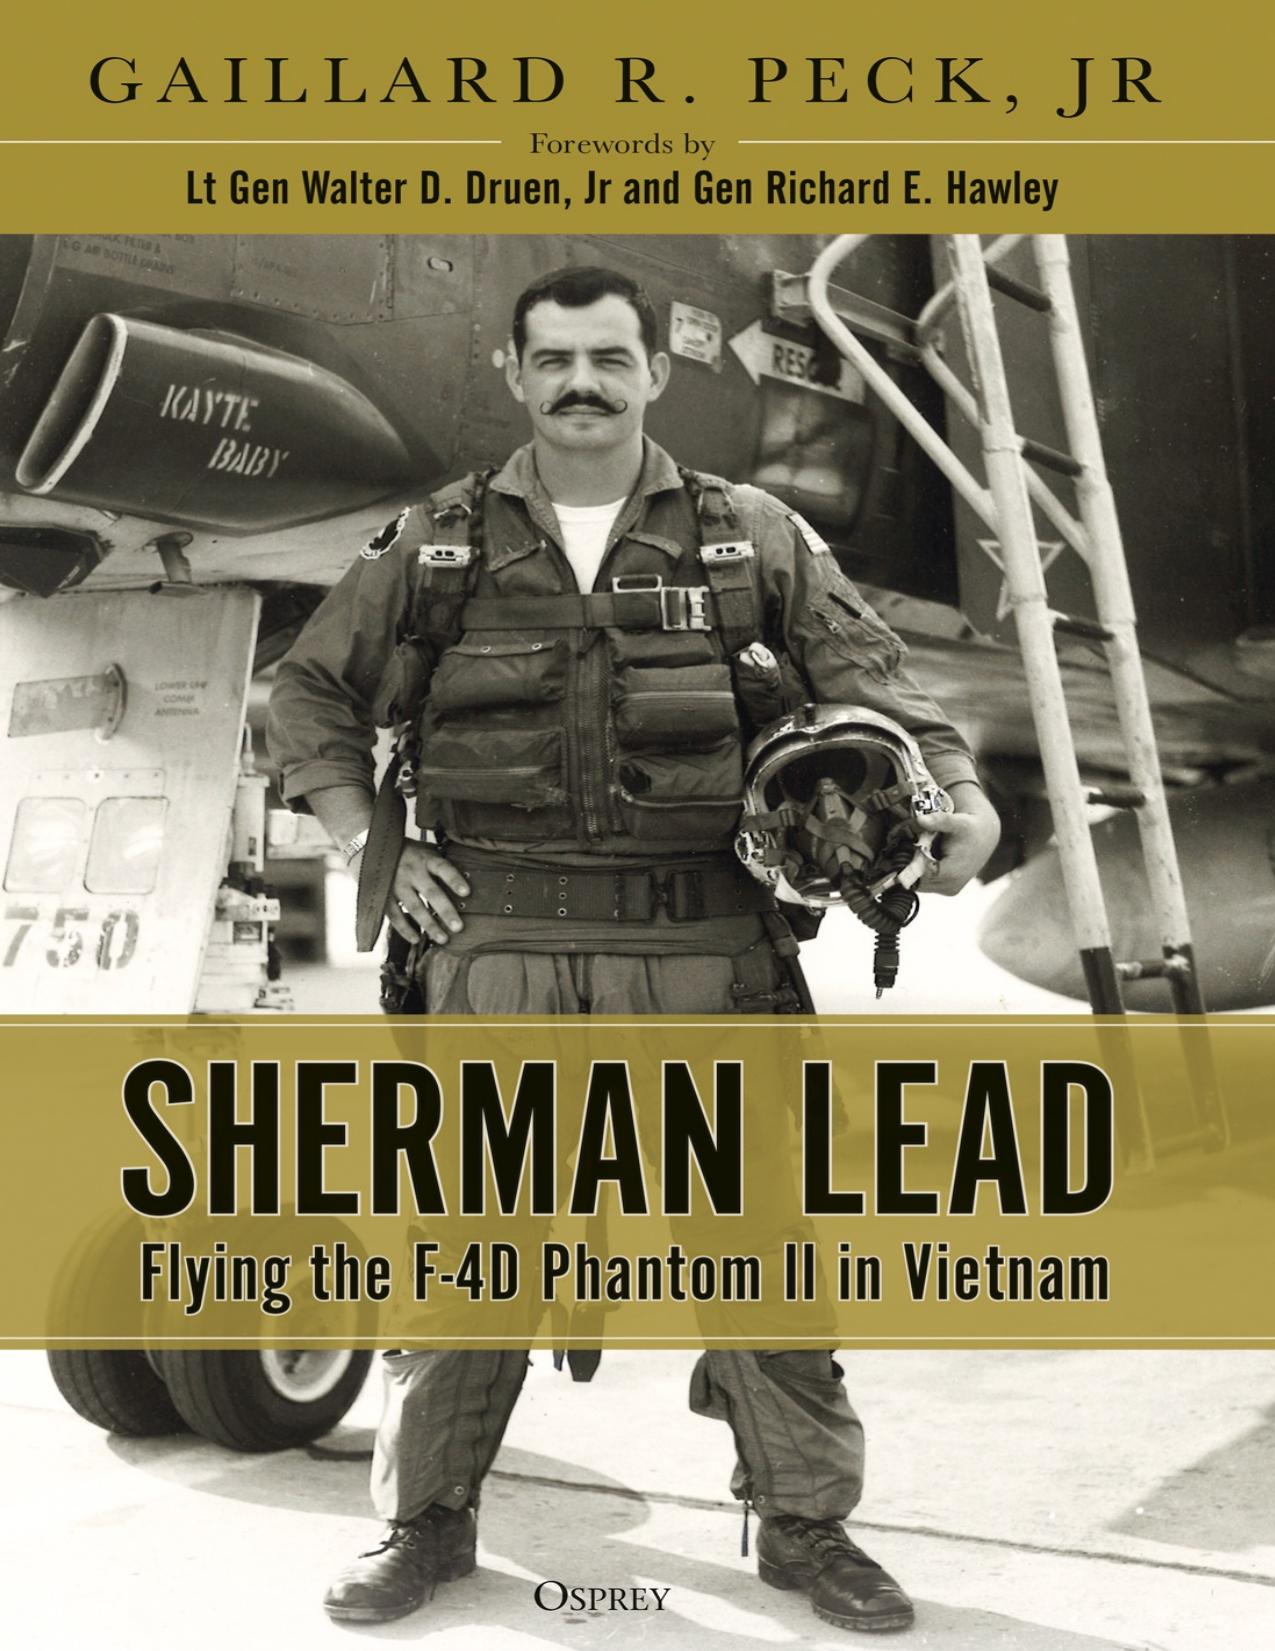 Sherman Lead by Gaillard R. Peck Jr